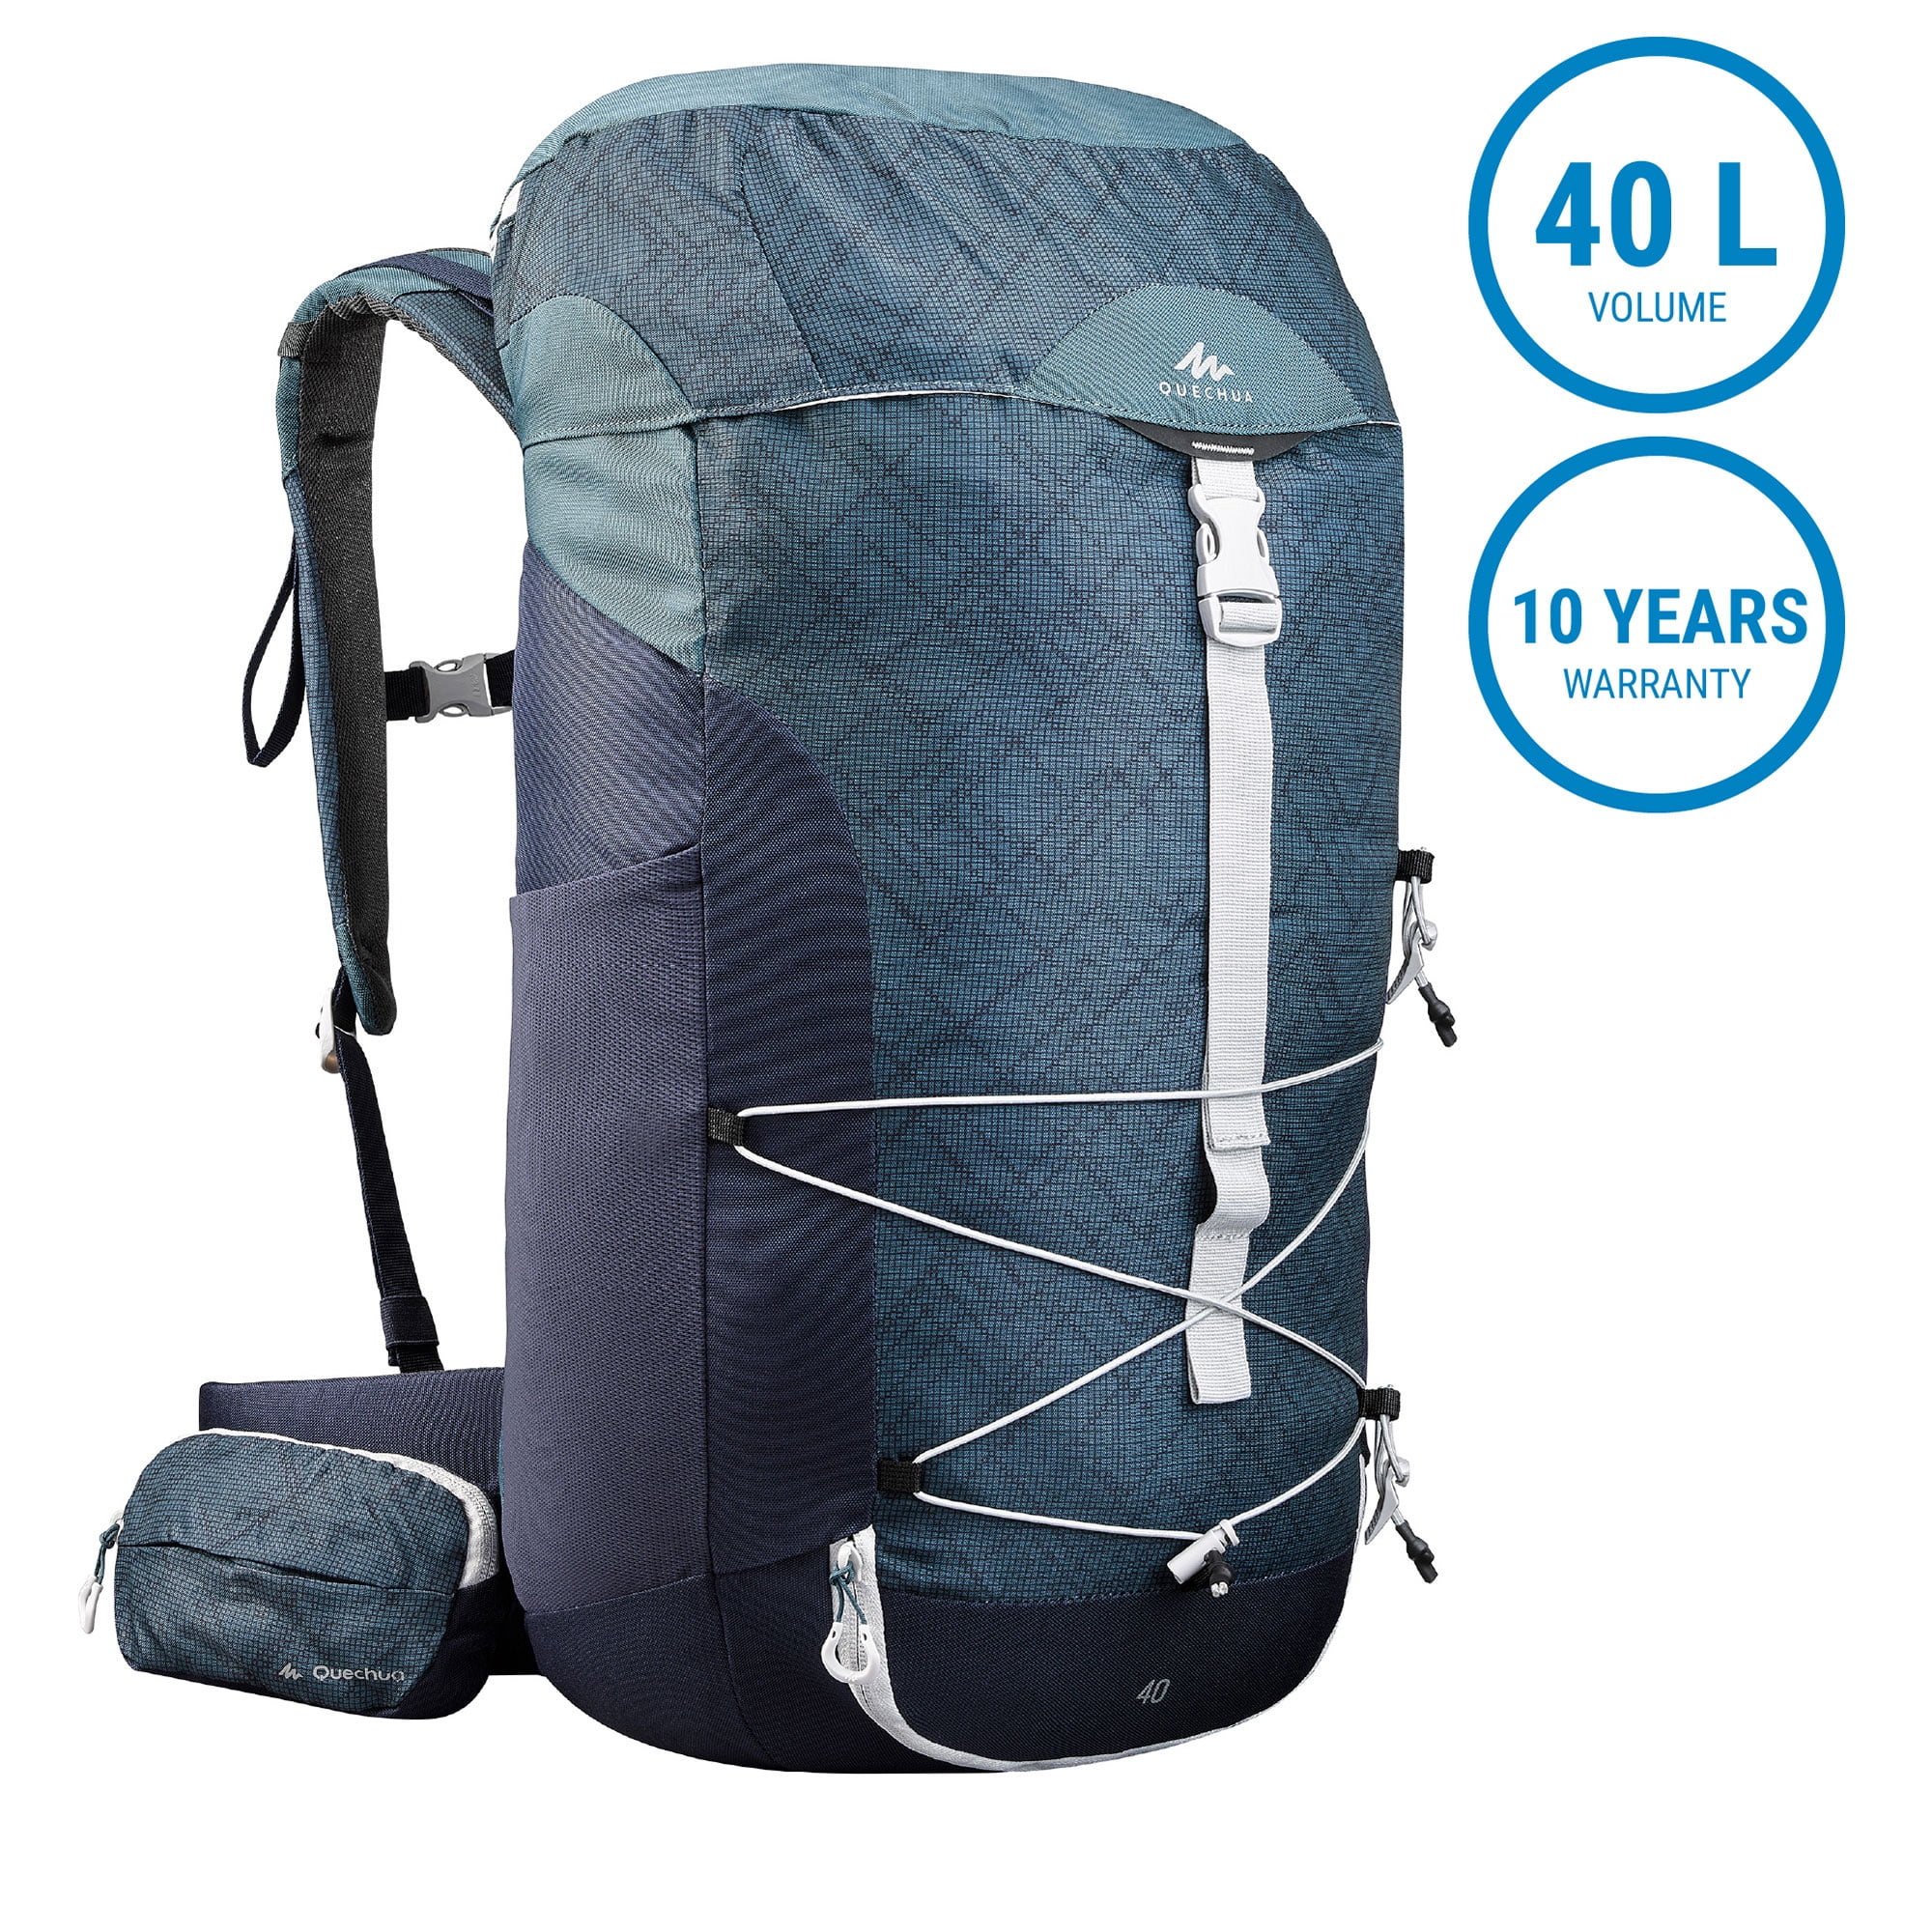 Buy Kit Of 3 Trekking Travel Storage Bags Travel Online | Decathlon-gemektower.com.vn